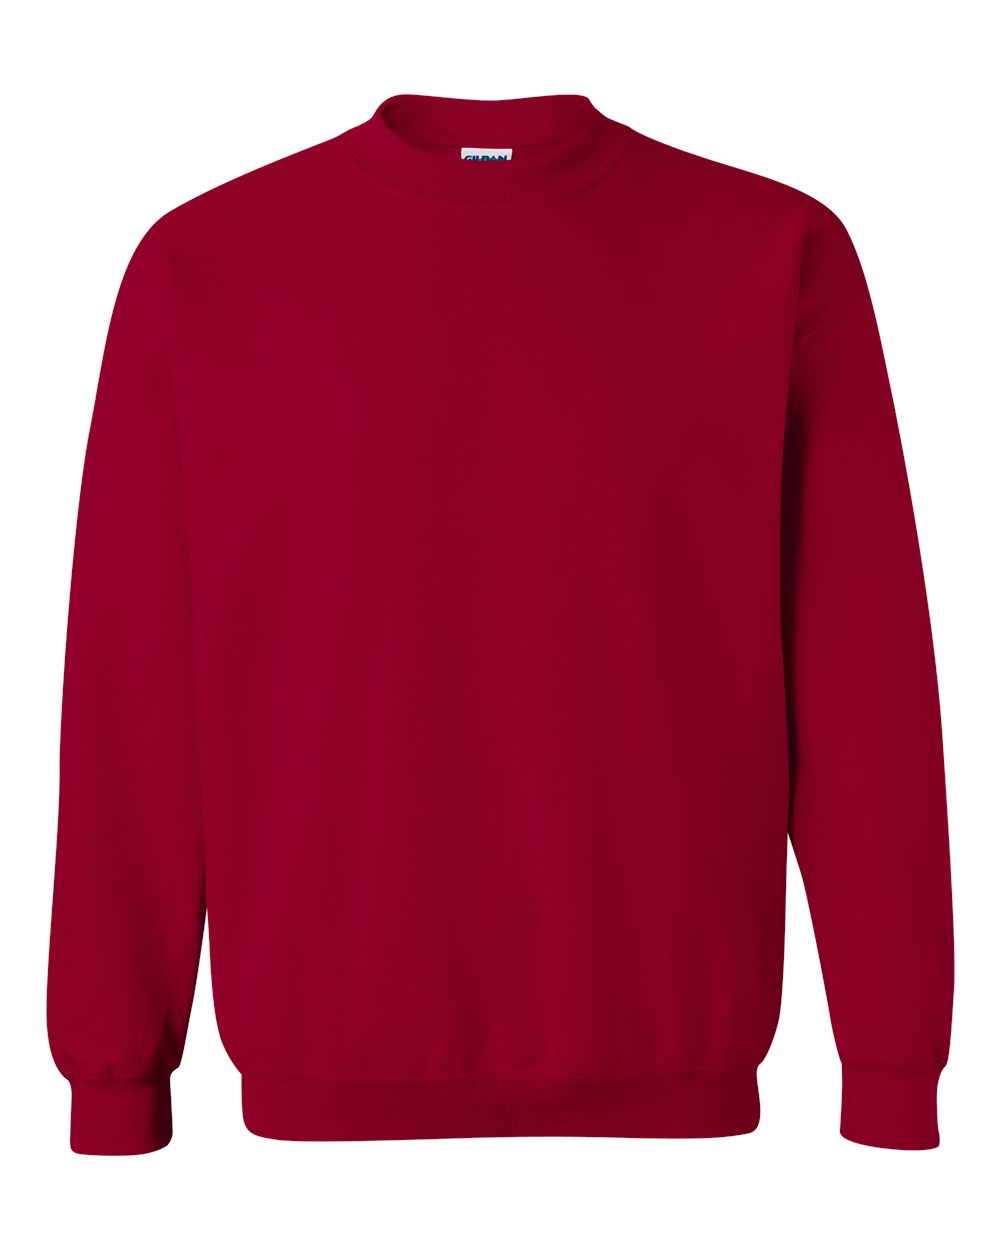 Gildan Crewneck Sweatshirt (18000) in Cardinal Red